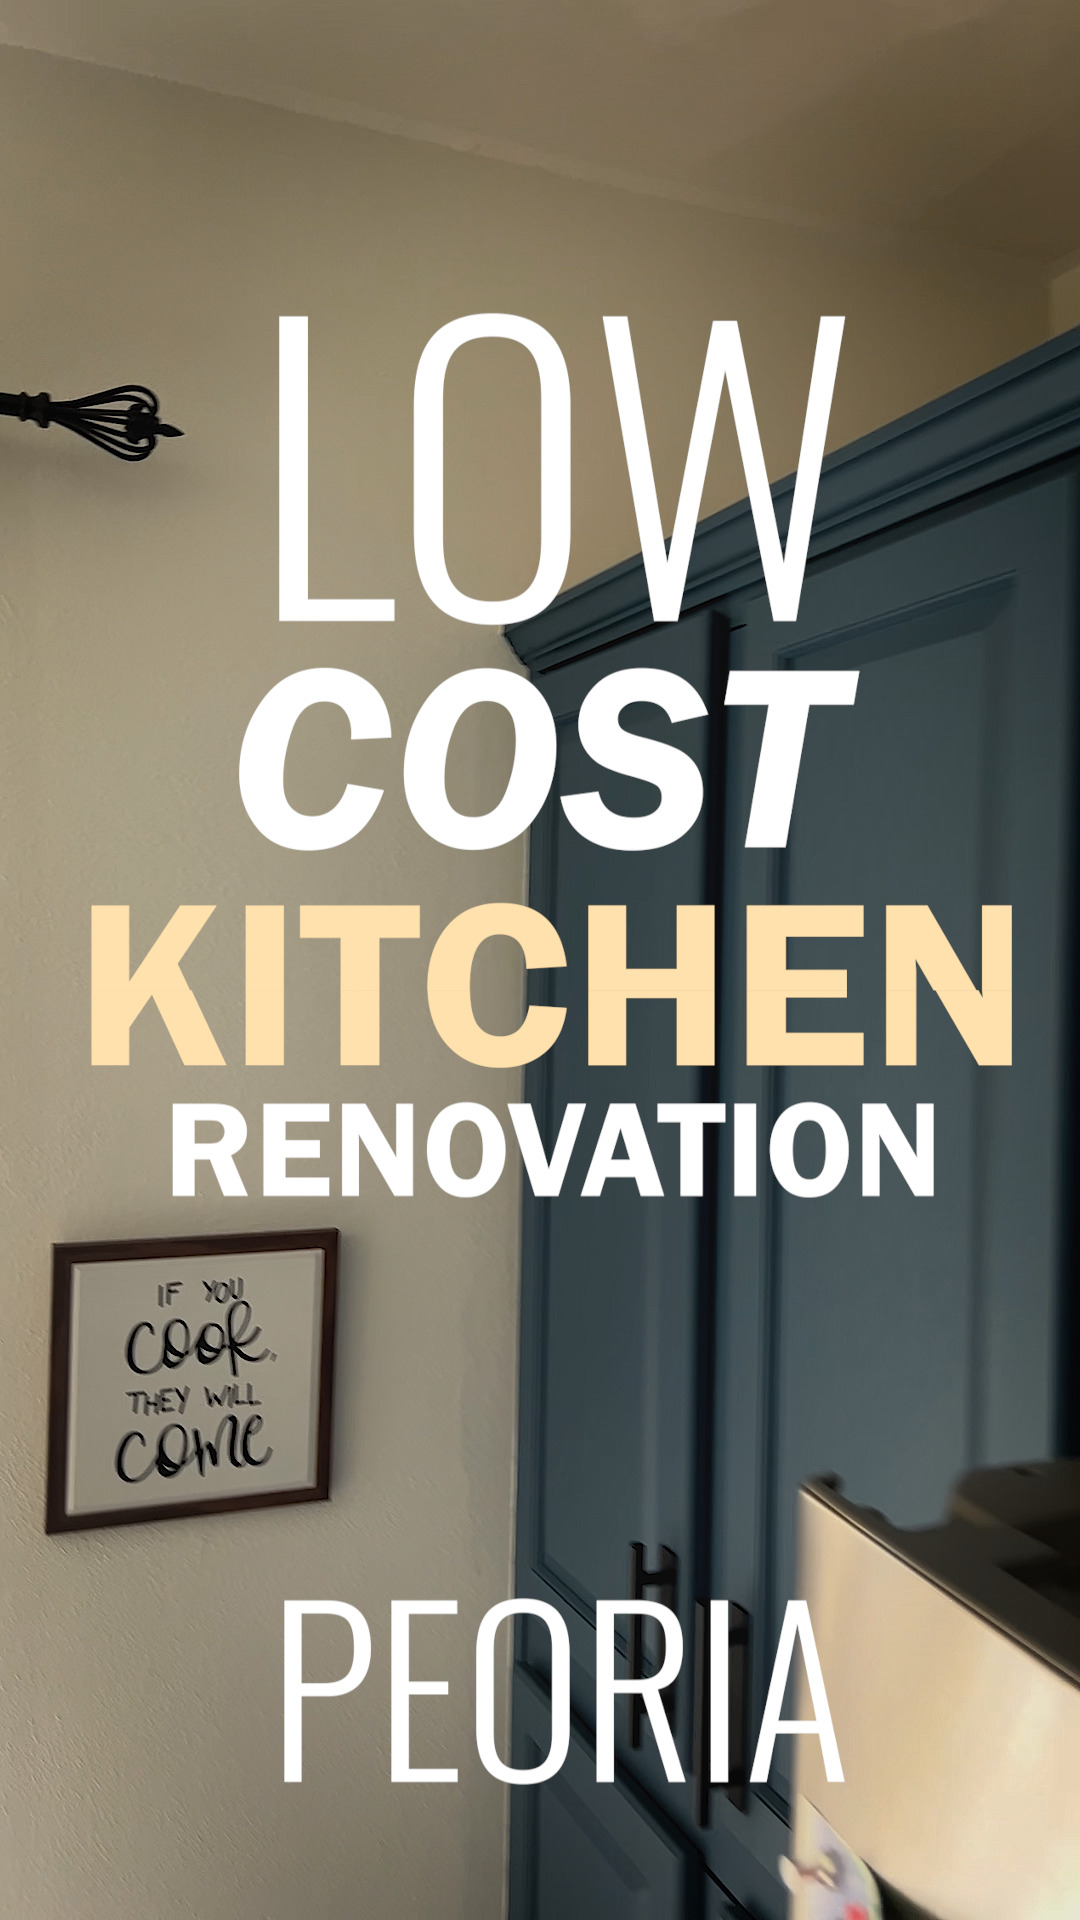 low cost kitchen renovation peoria IL